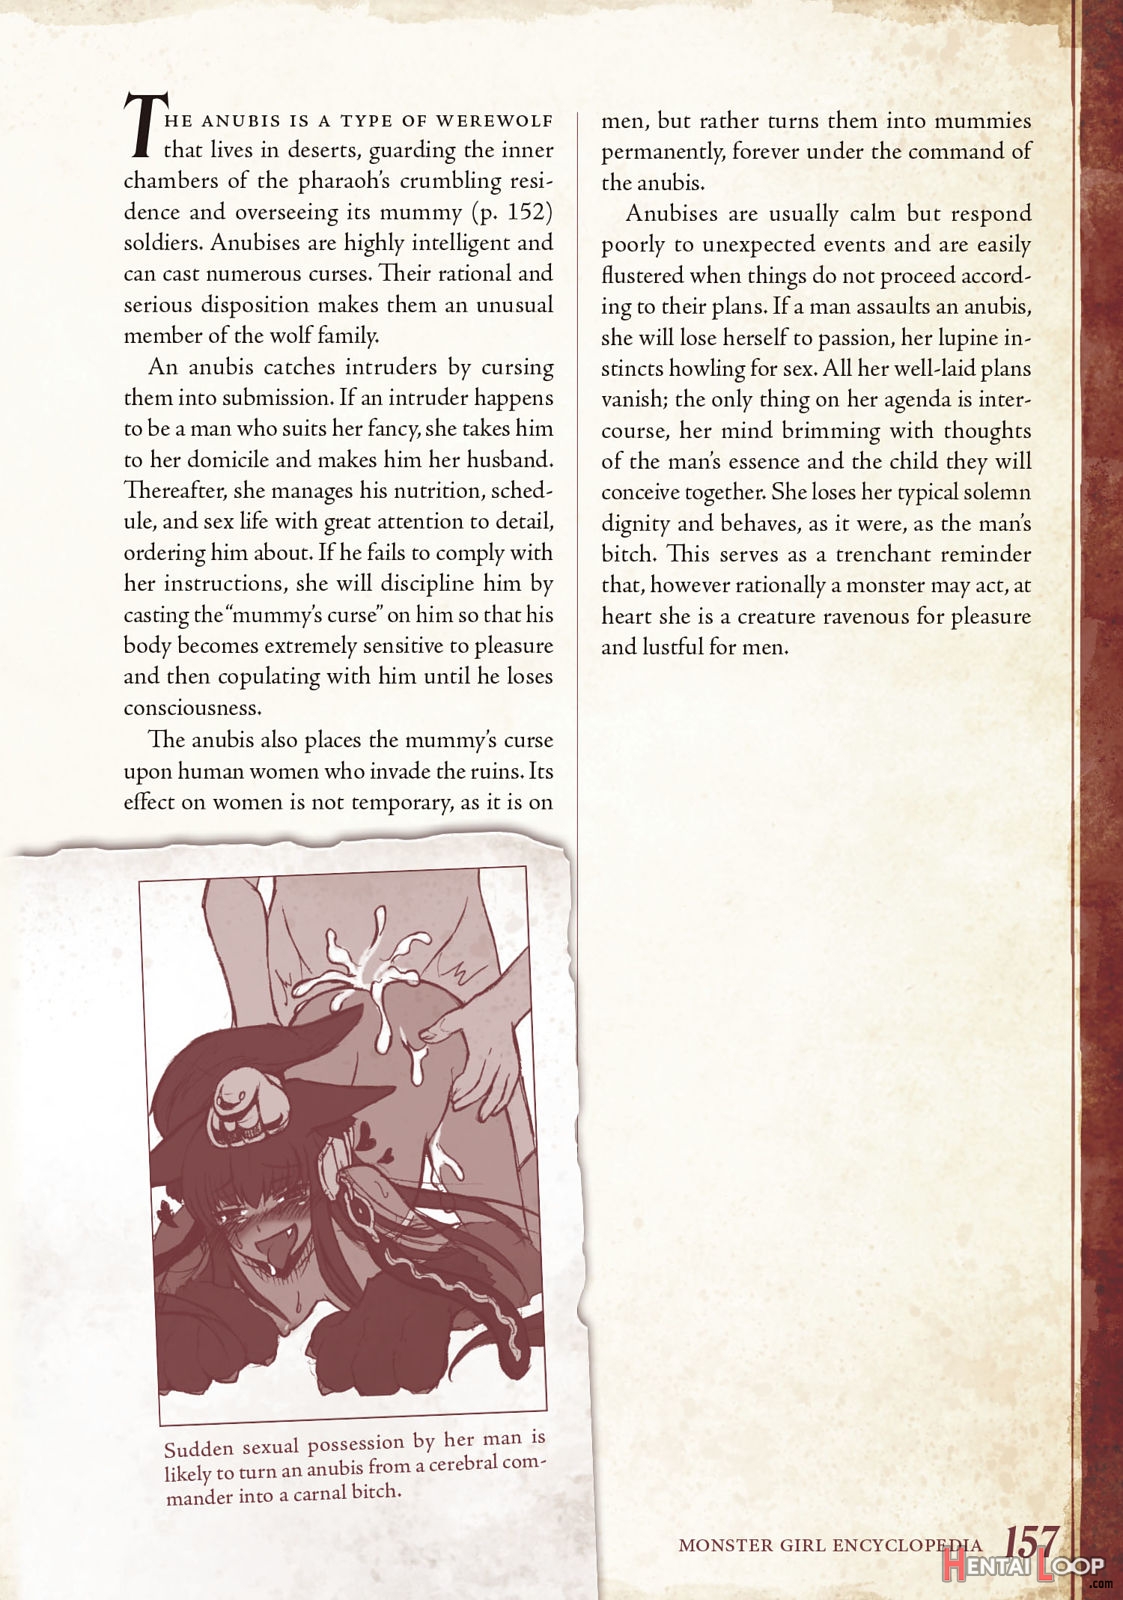 Monster Girl Encyclopedia Vol. 1 page 158